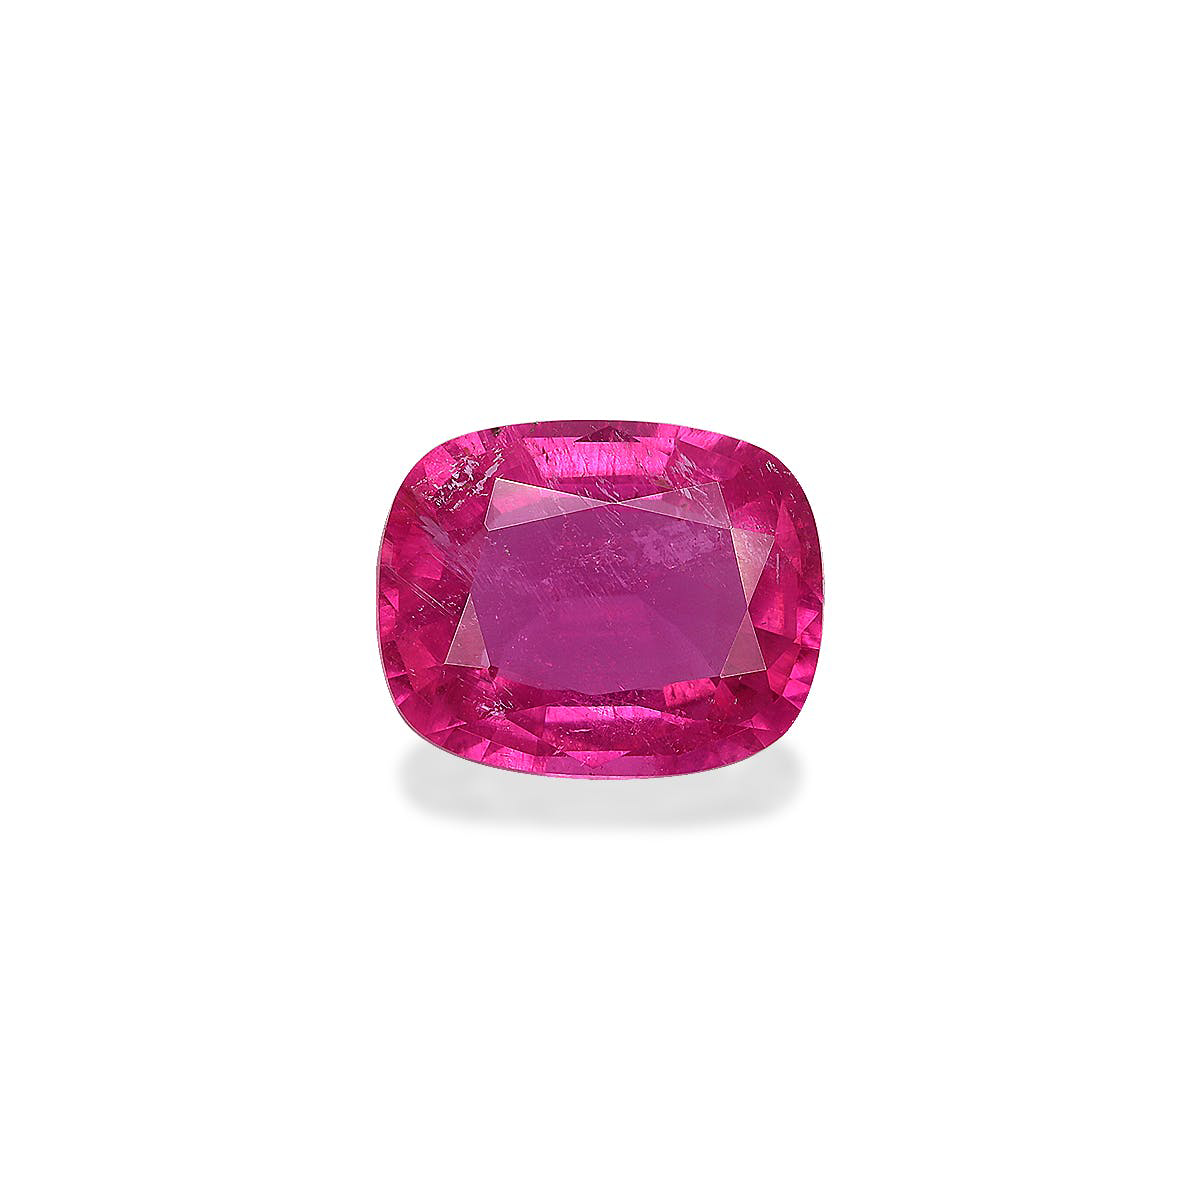 Picture of Vivid Pink Rubellite Tourmaline 2.78ct - 10x8mm (RL1108)